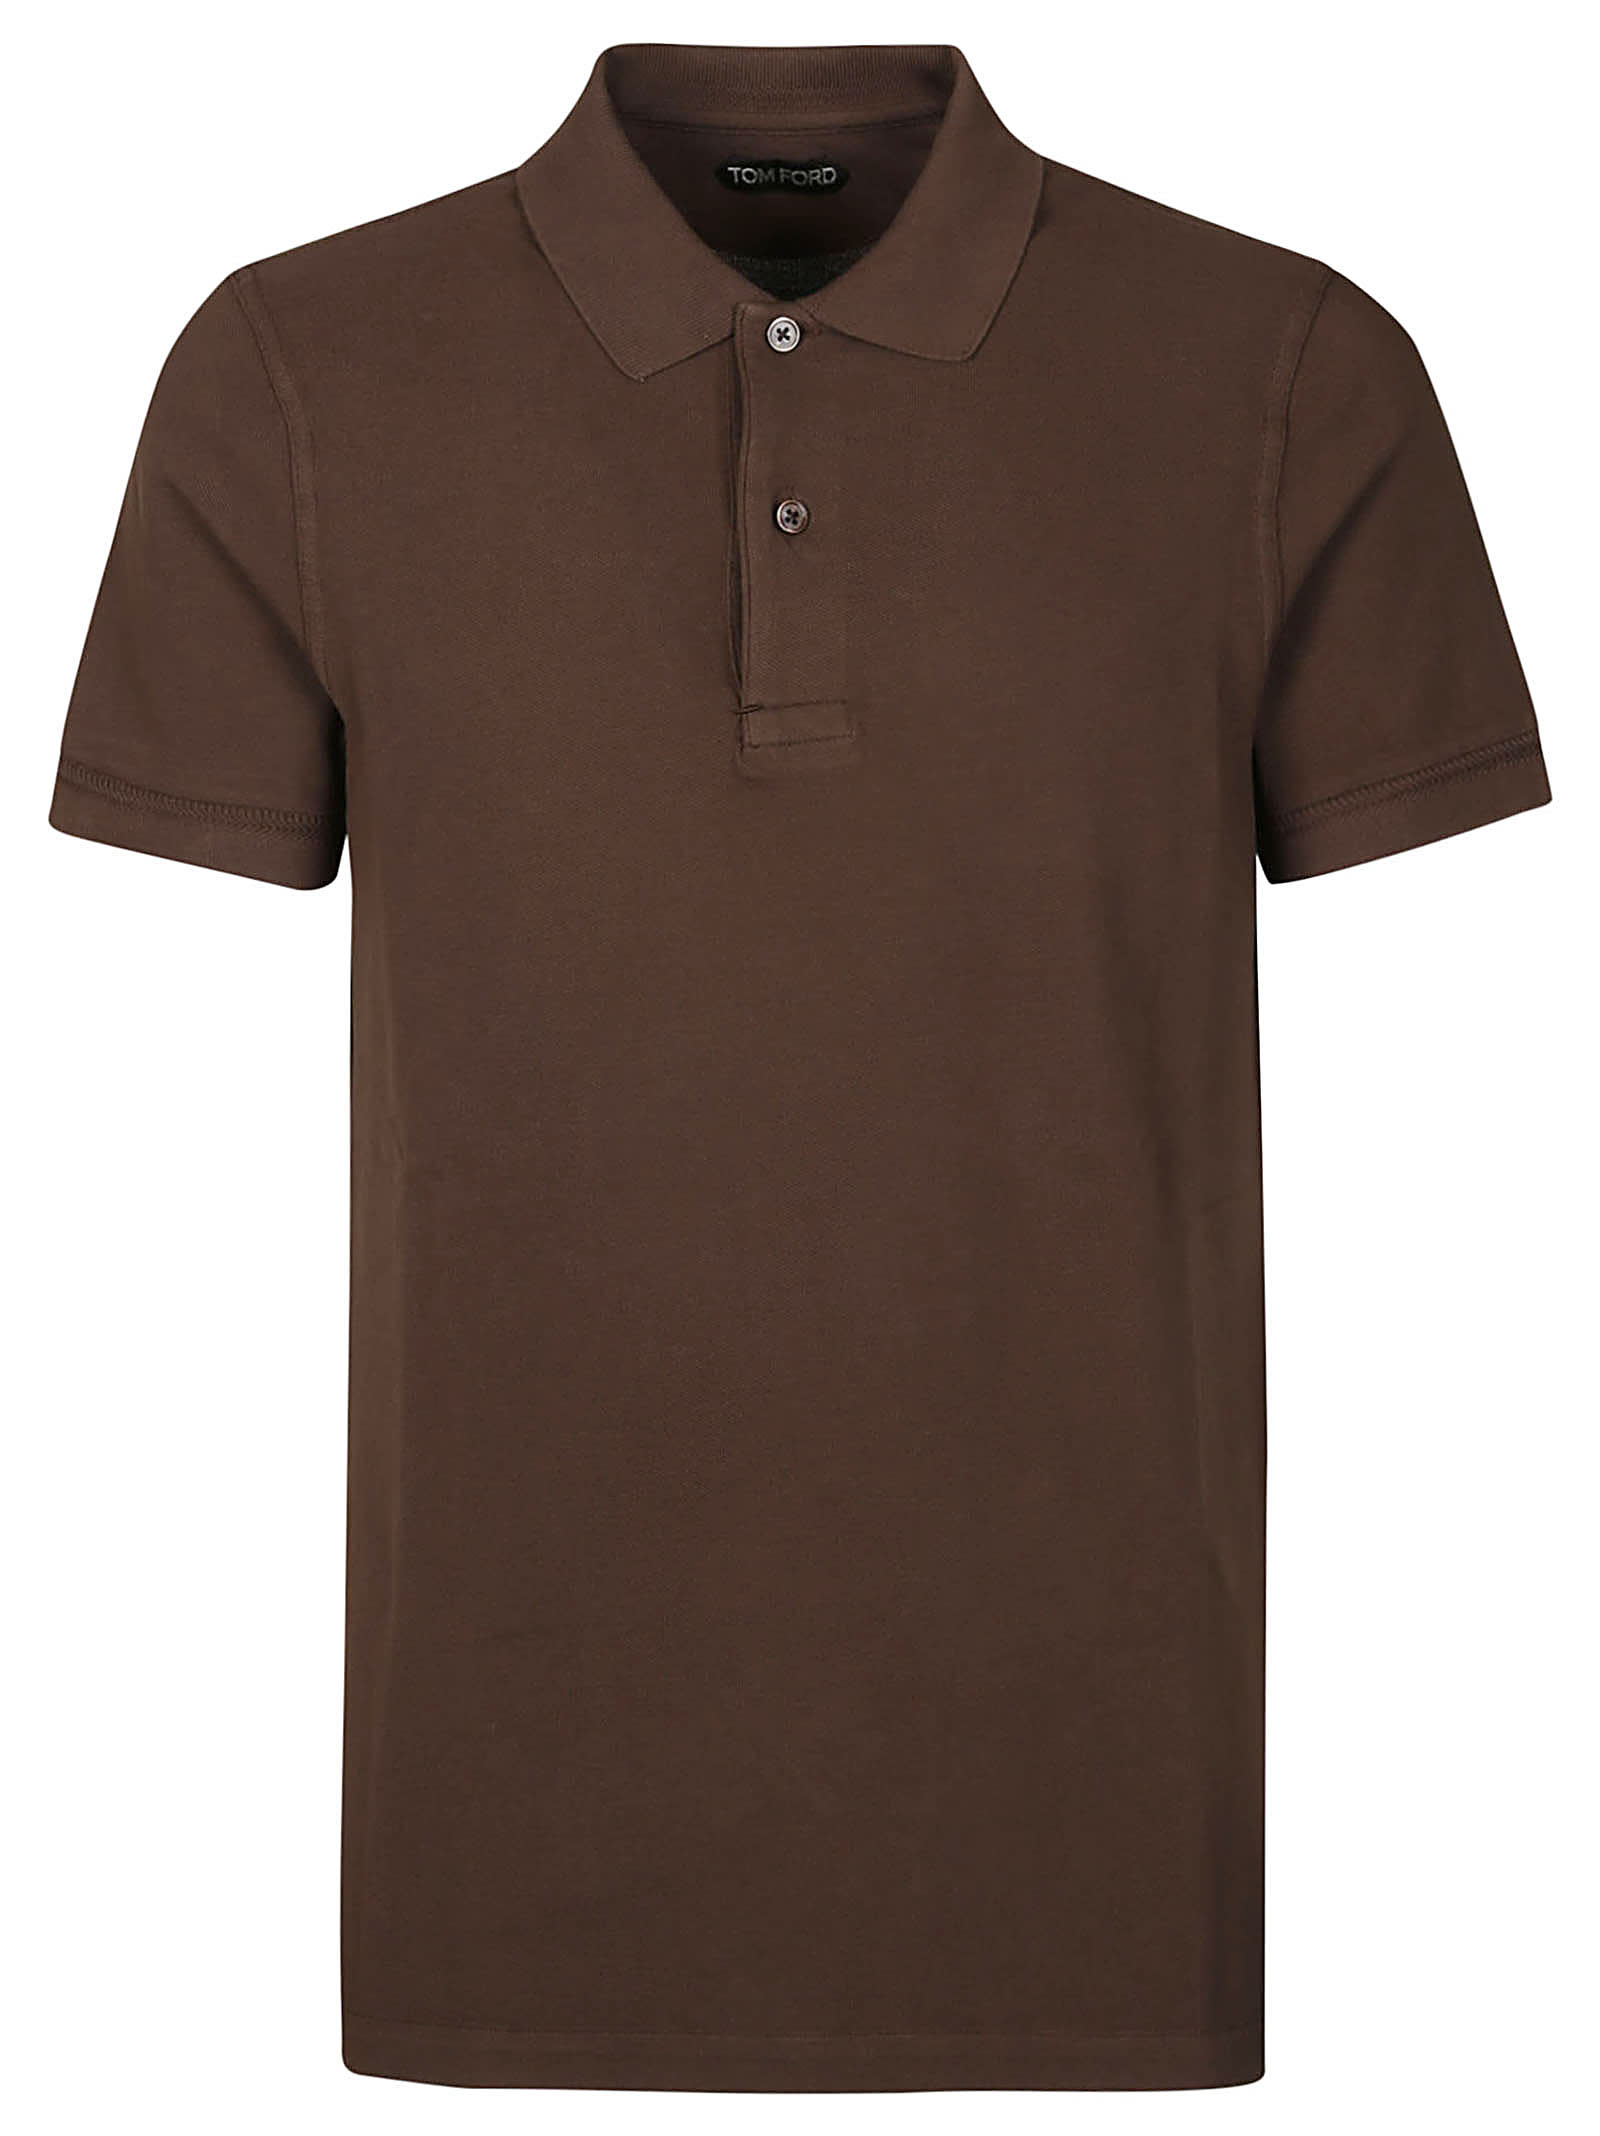 Tom Ford Tennis Piquet Short Sleeve Polo Shirt In Chocolate